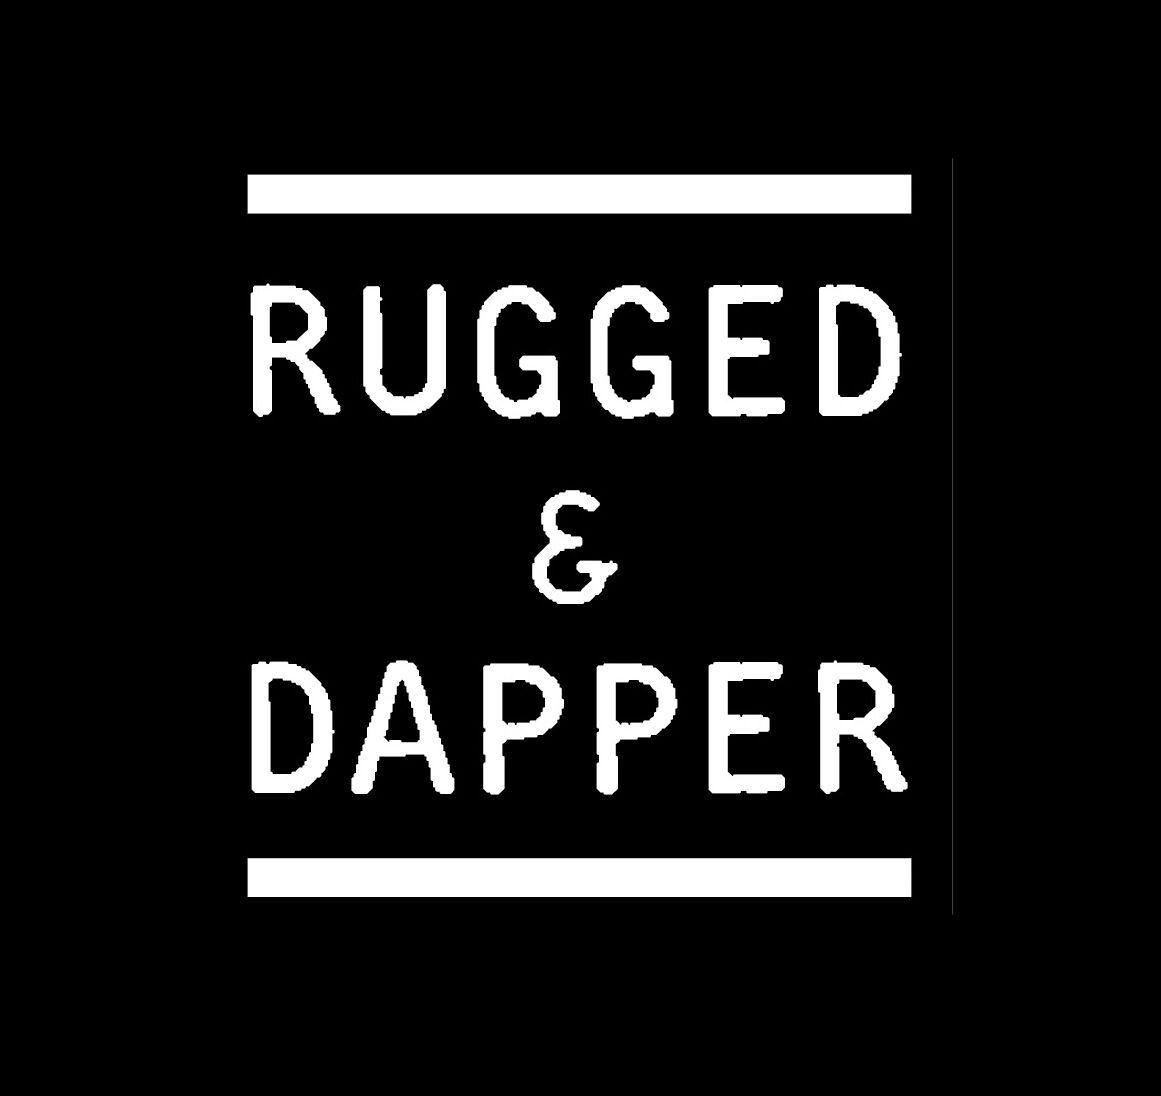 Dapper Logo - Amazon.com: RUGGED & DAPPER